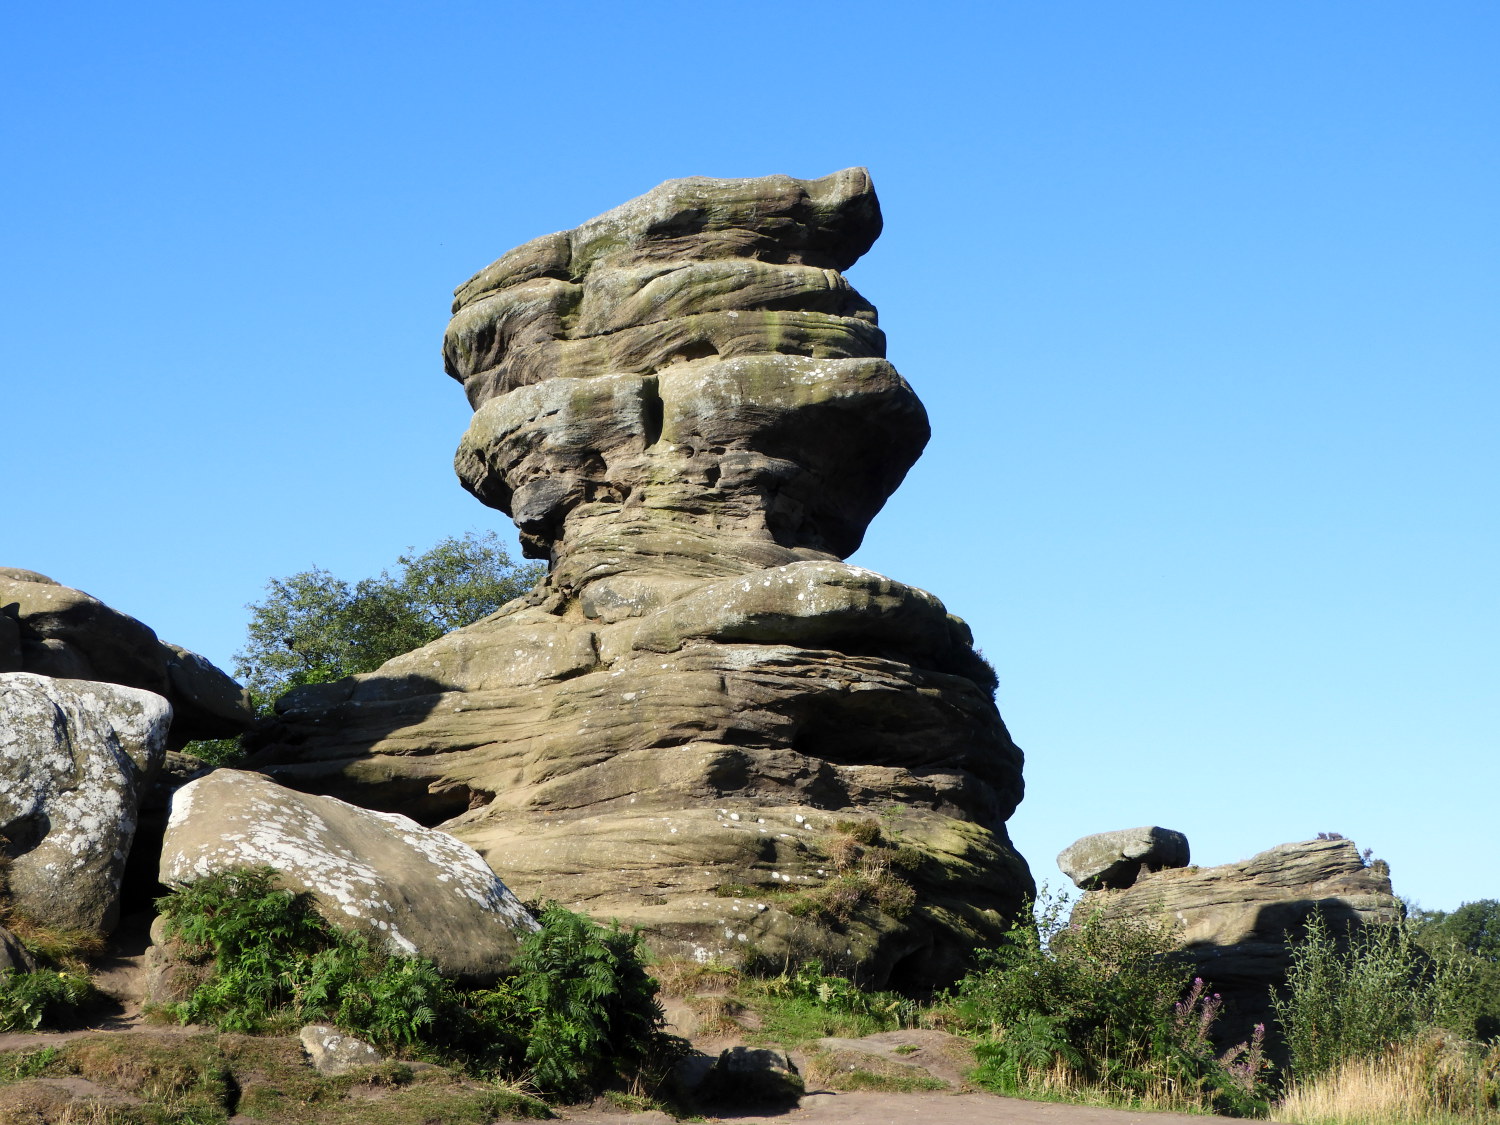 A thoughtful outcrop at Brimham Rocks